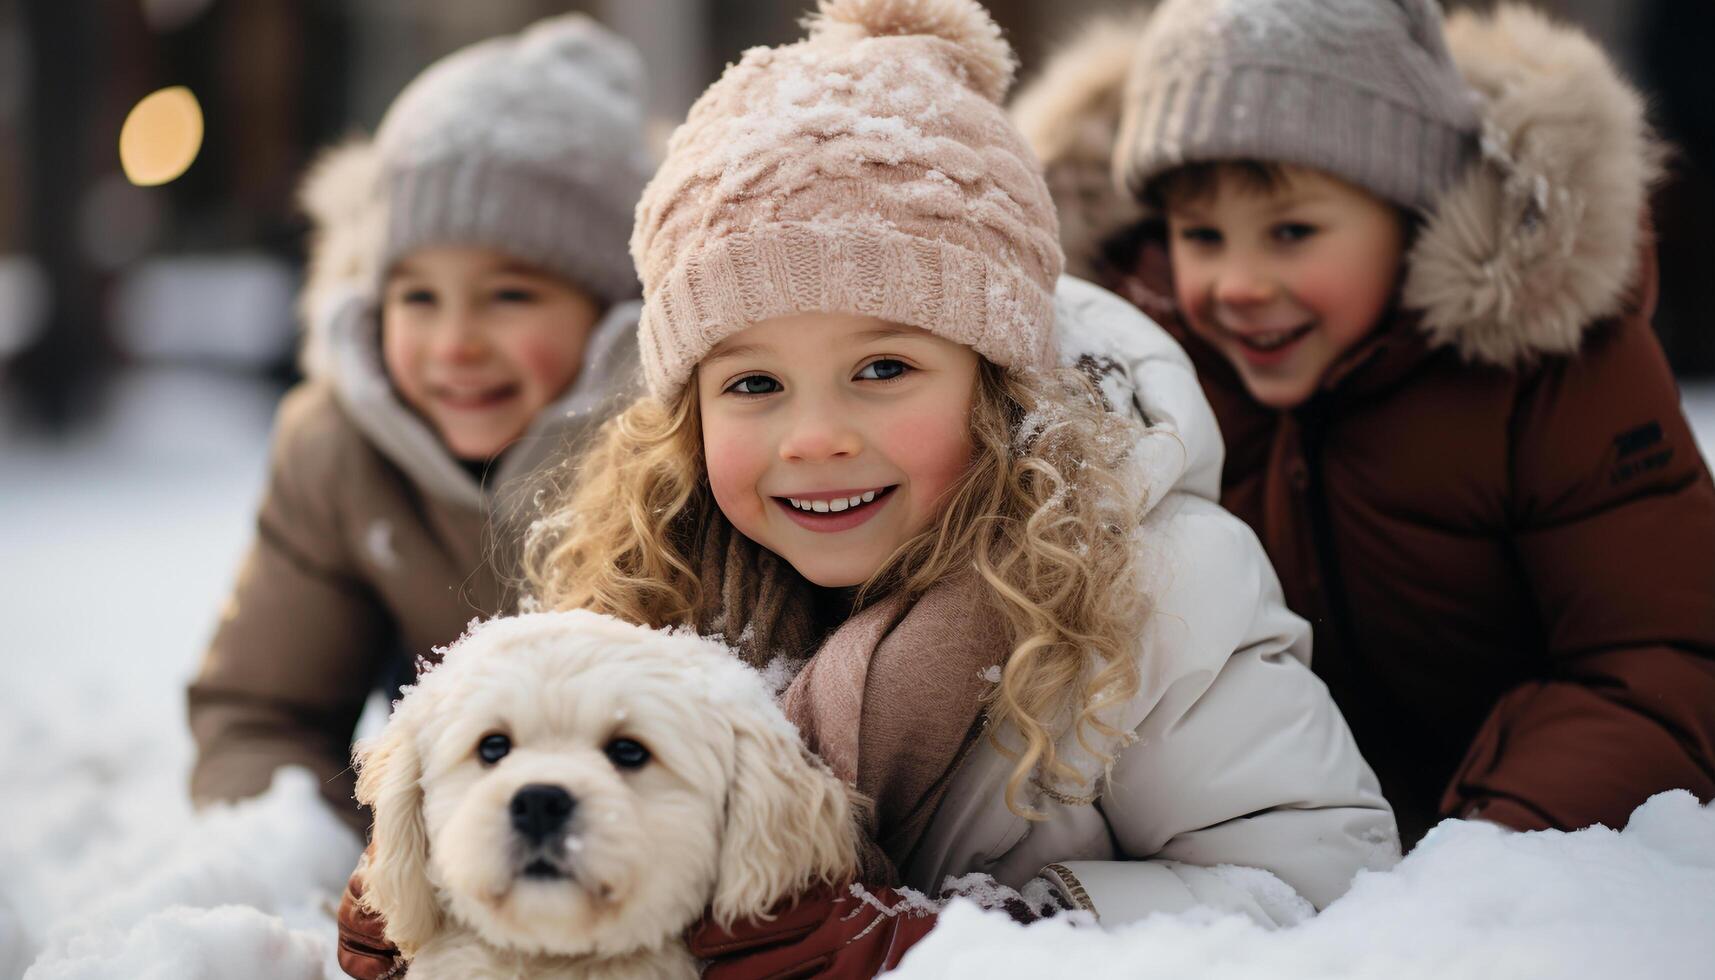 ai gegenereerd glimlachen meisjes spelen in sneeuw, omarmen hond, blij winter pret gegenereerd door ai foto